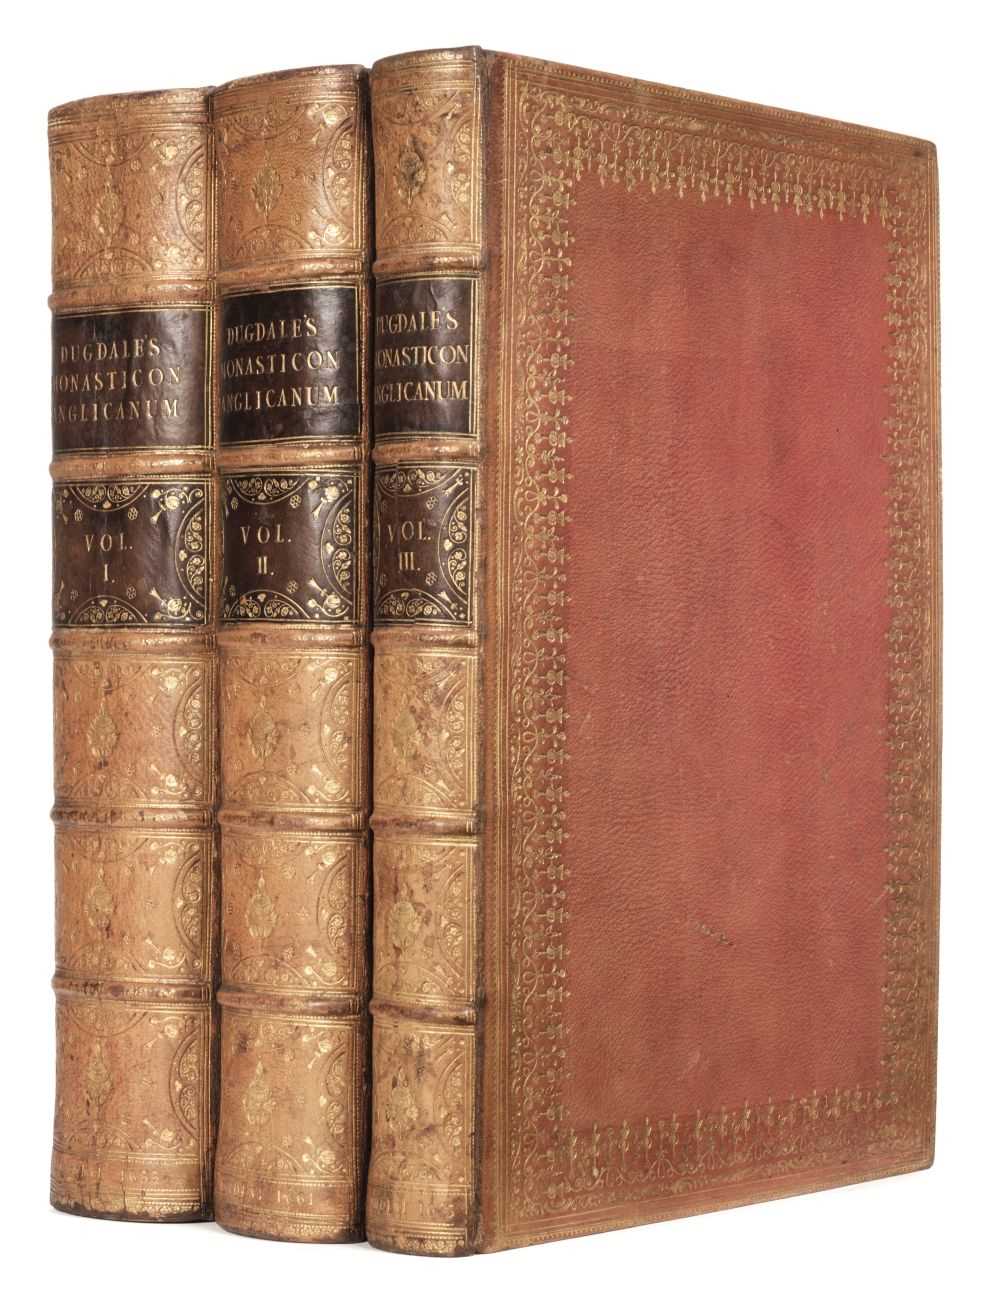 Lot 44 - Dugdale (William, & Dodsworth, Roger). Monasticon Anglicanum, 3 volumes, 1st editions, 1655-1673